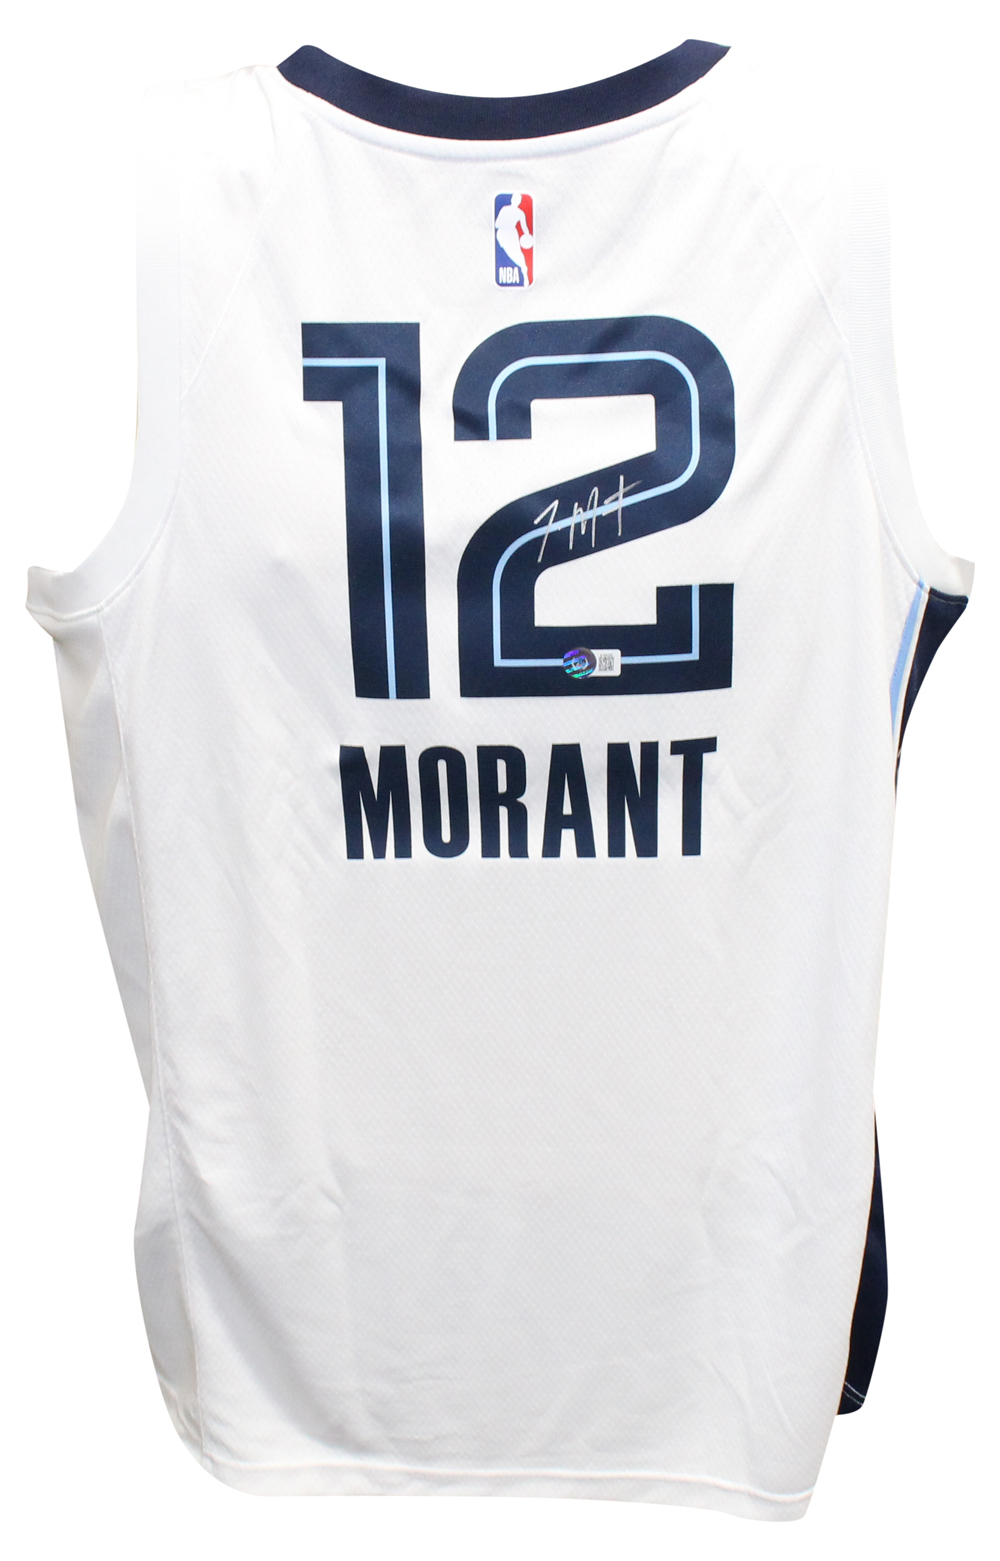 Ja Morant Autographed Memphis Grizzlies White Jersey Nike Beckett